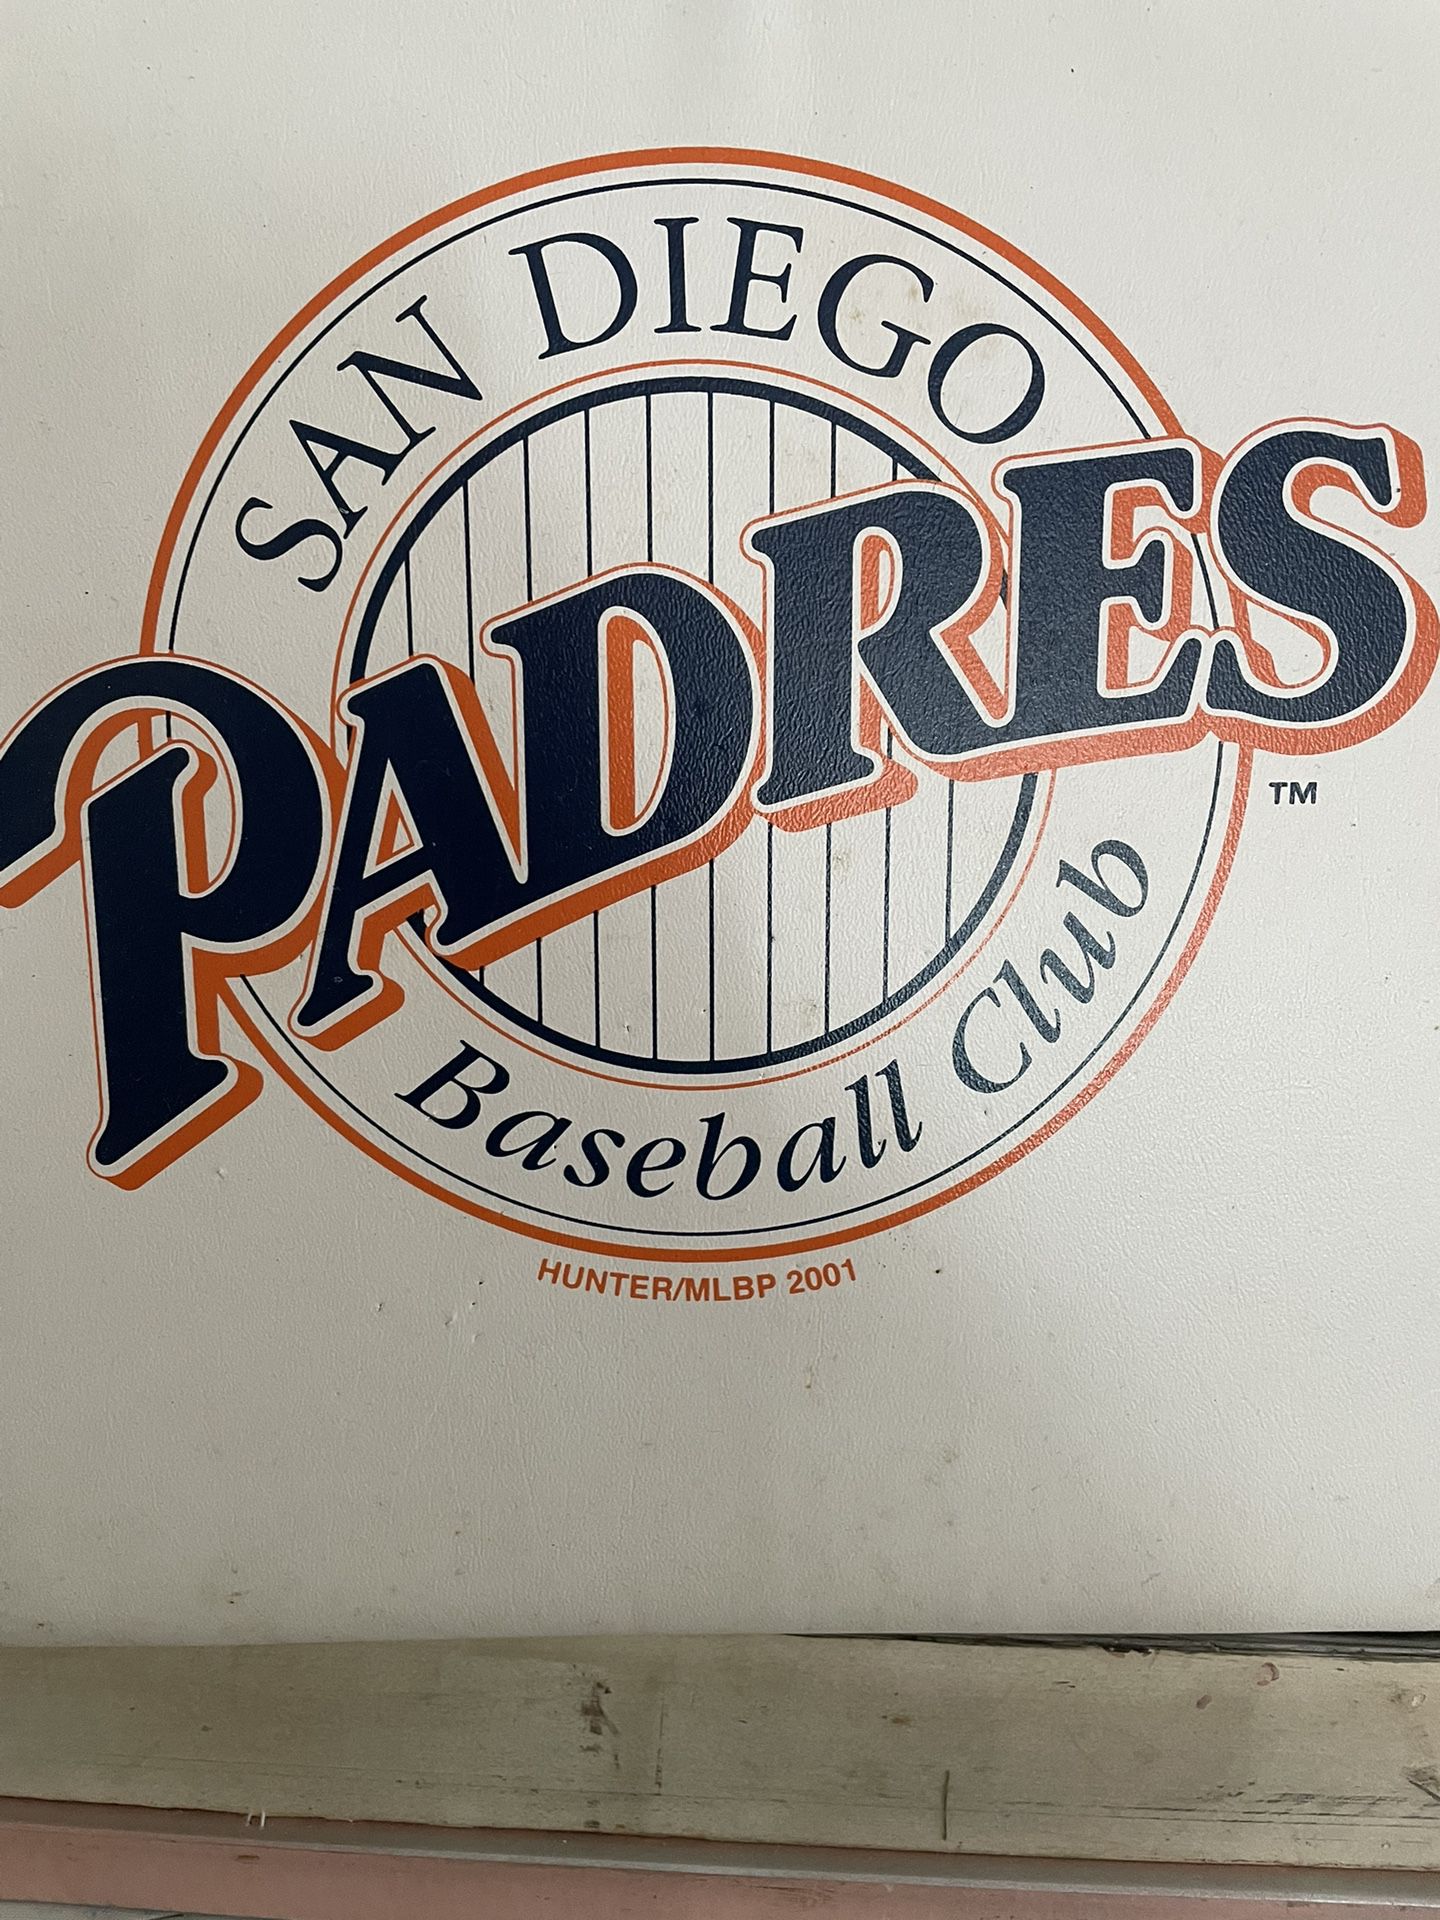 San Diego Padres Seat Pad Used 